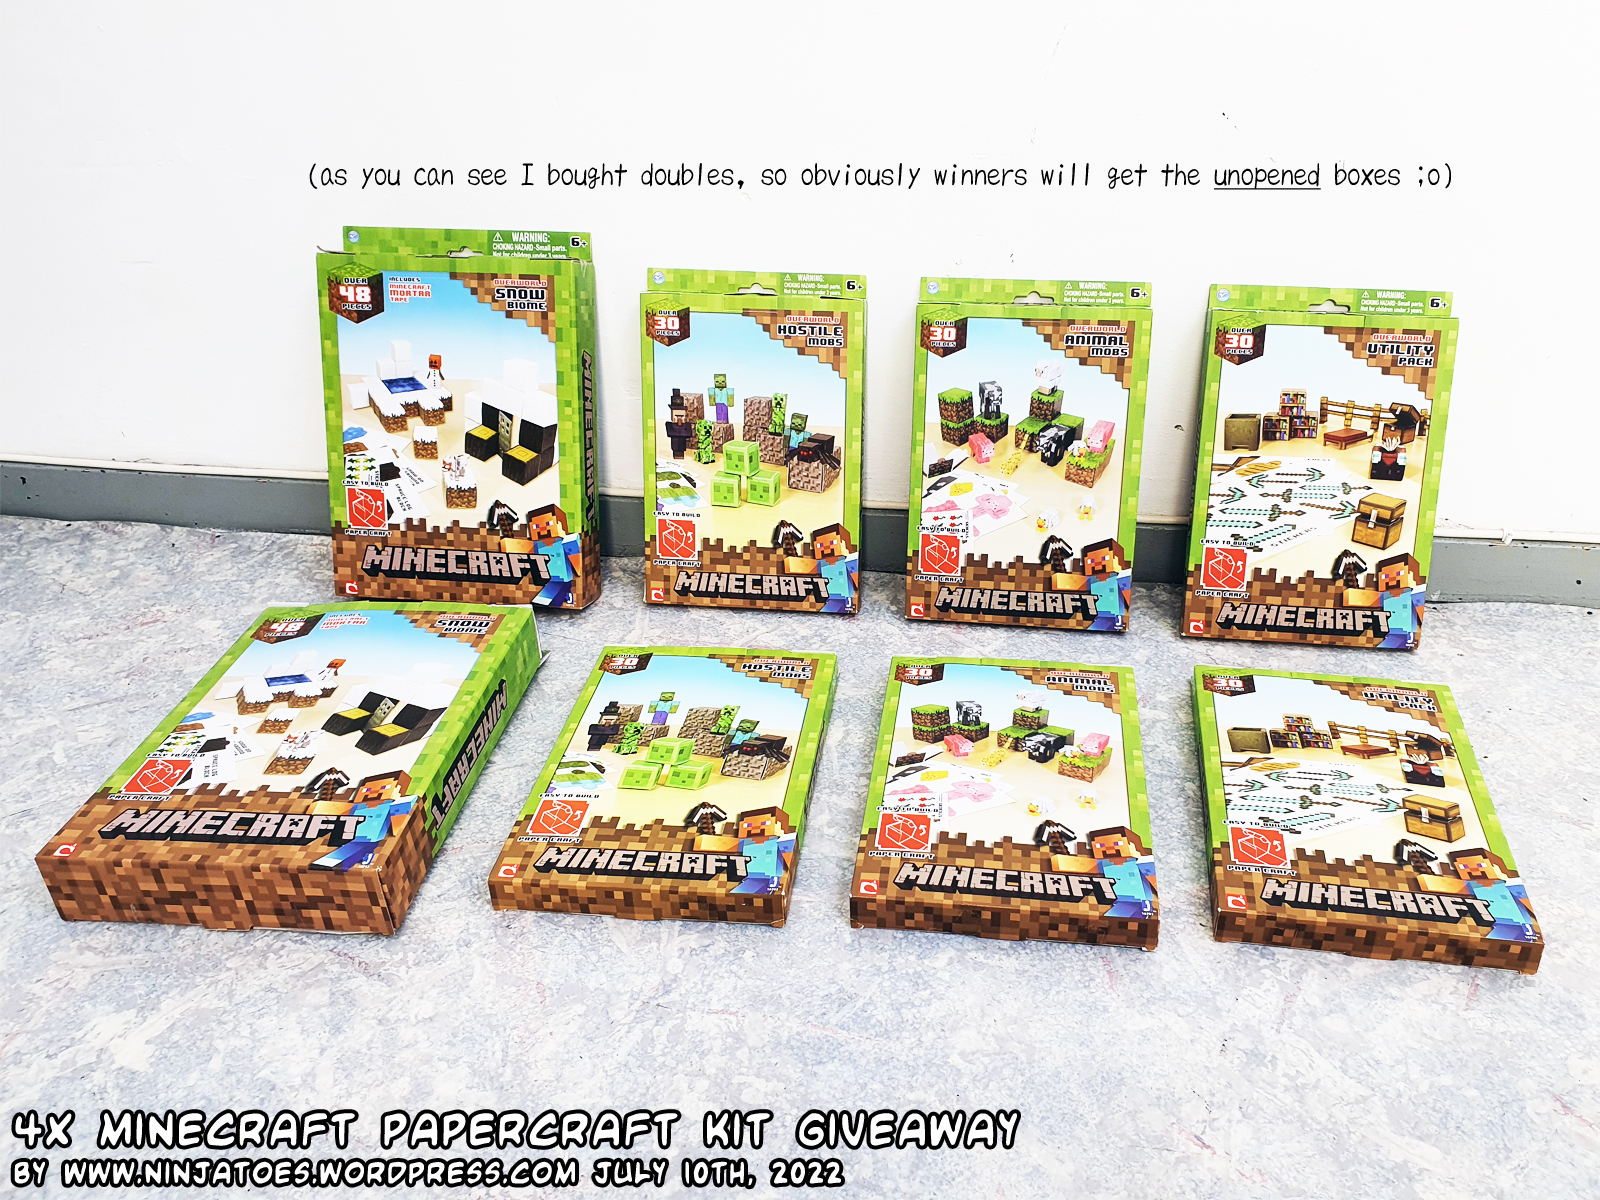 Ninjatoes' papercraft weblog: The Papercraft Minecraft Kit Giveaway Winners!